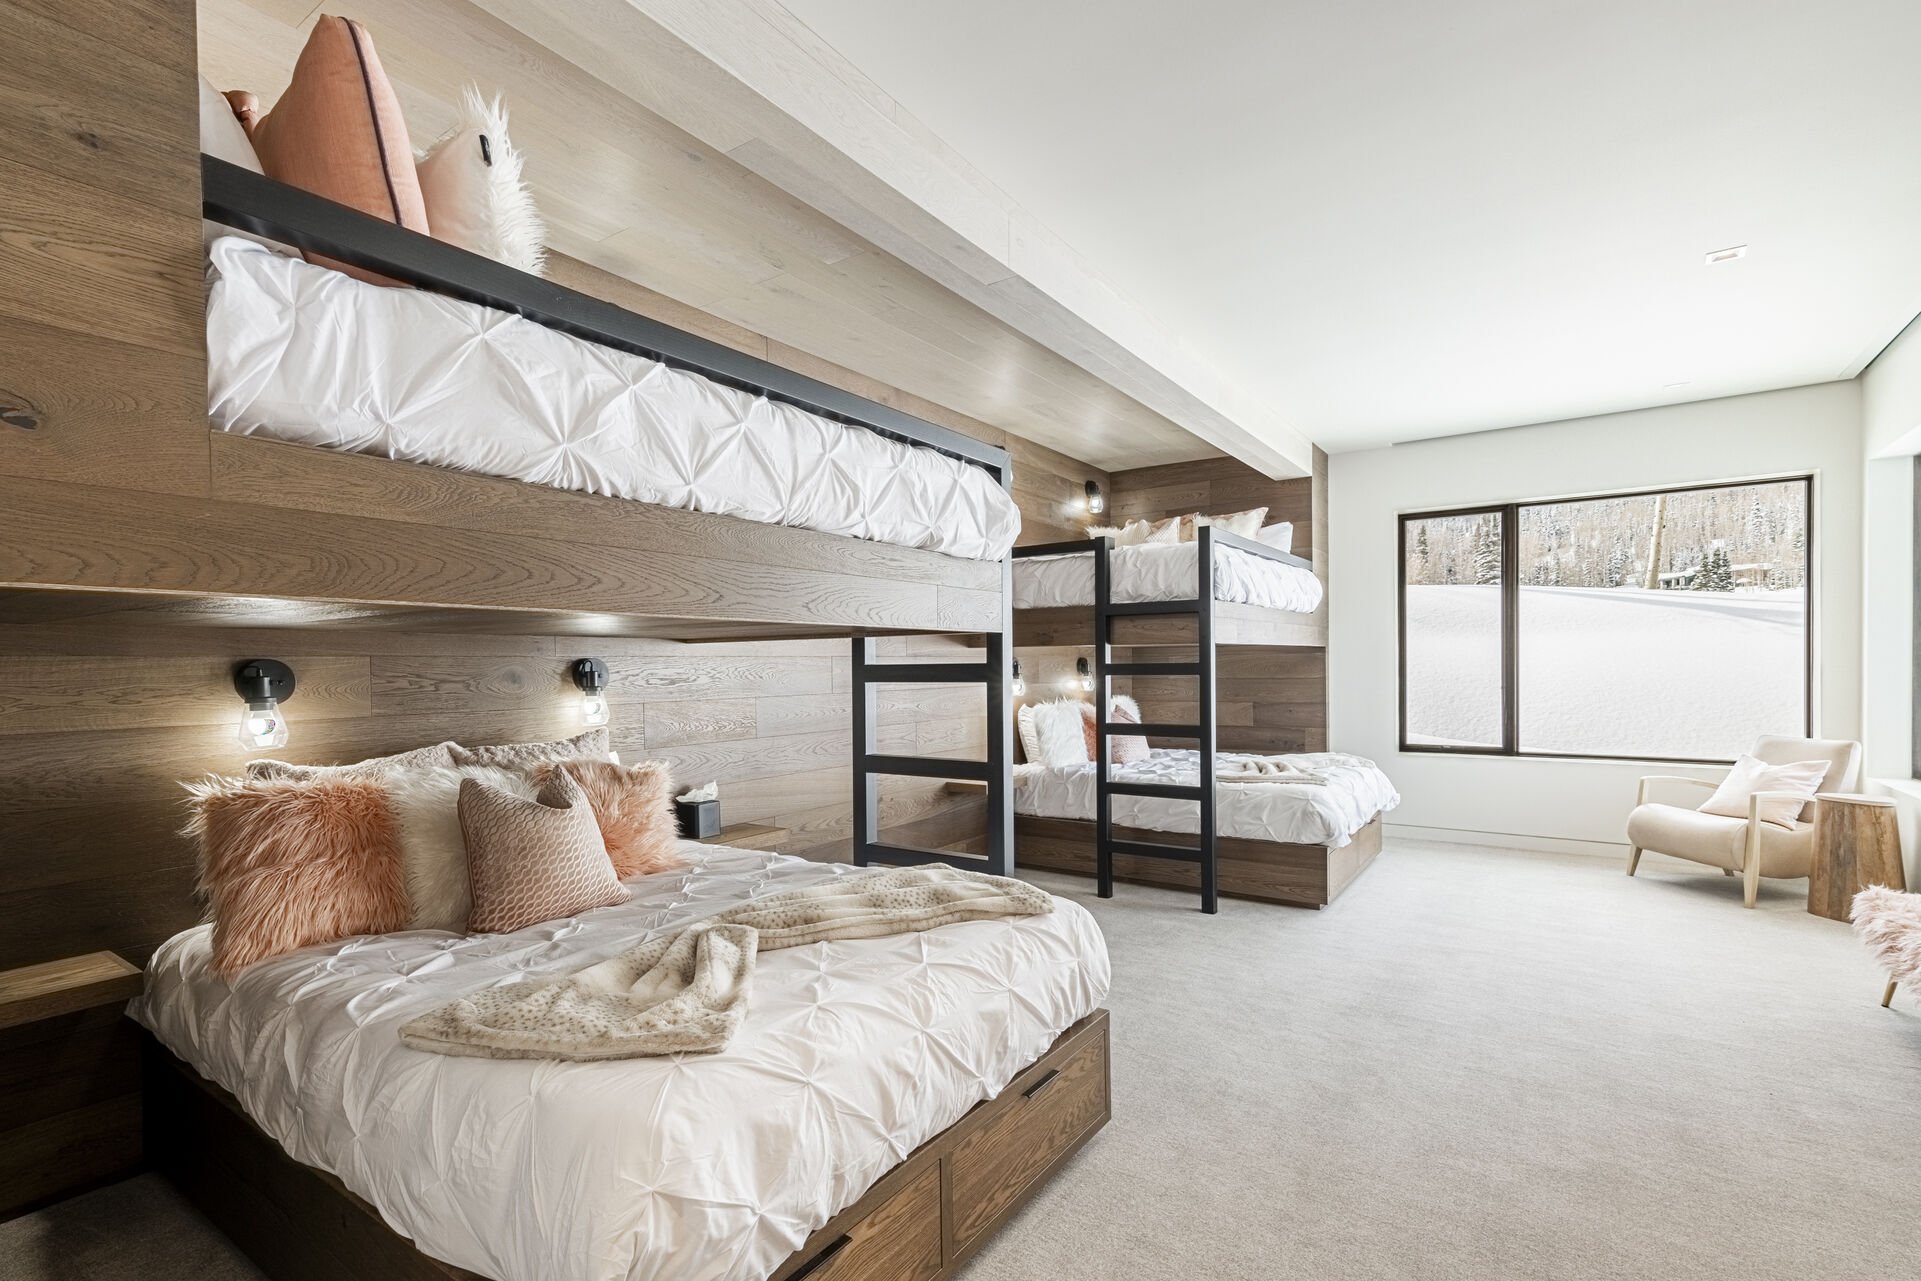 Lower level bedroom 7 - bunk room with en suite bath and walk-in closet